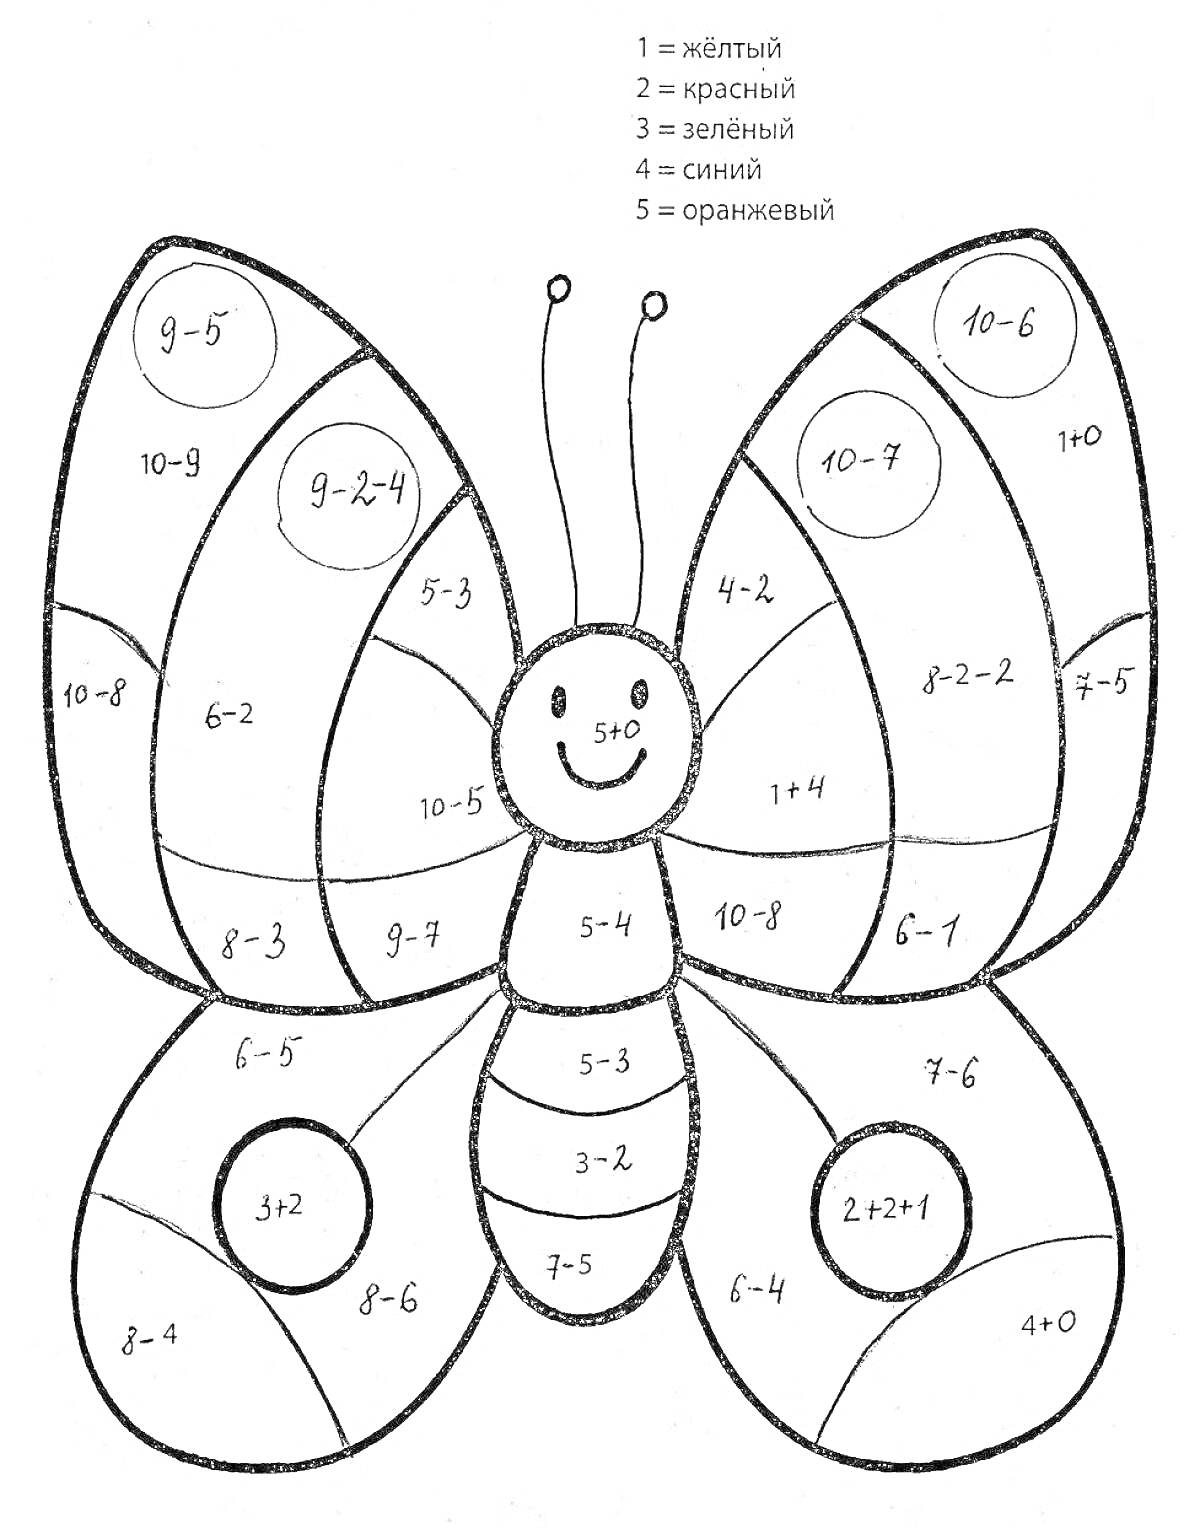 Раскраска Раскраска-бабочка с математическими задачками для 1 класса (до 10)